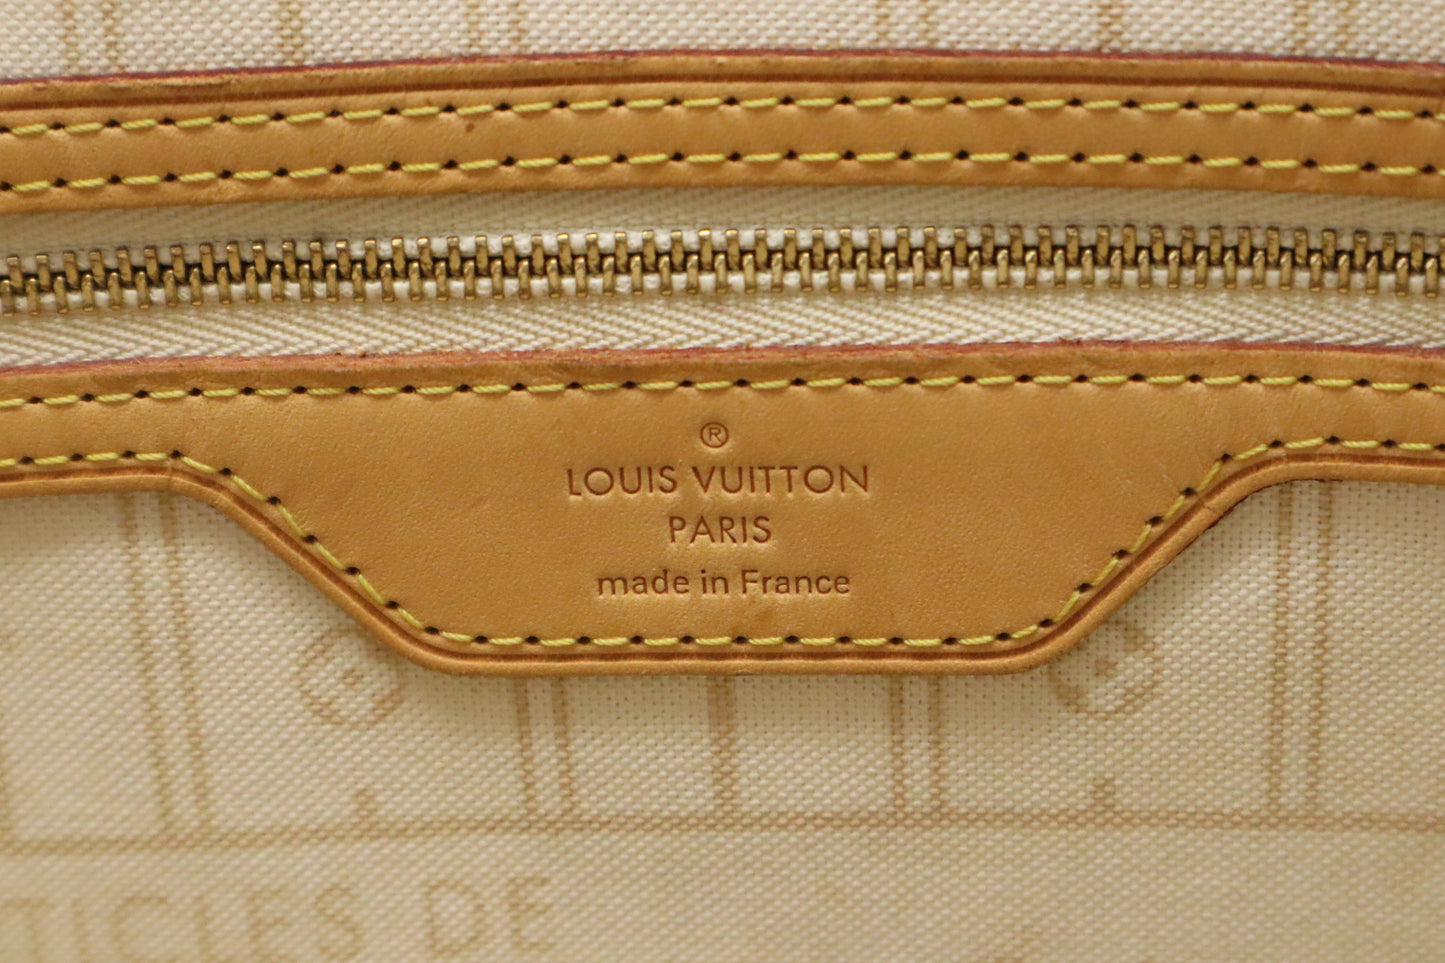 Louis Vuitton Neverfull GM in Damier Azur Canvas